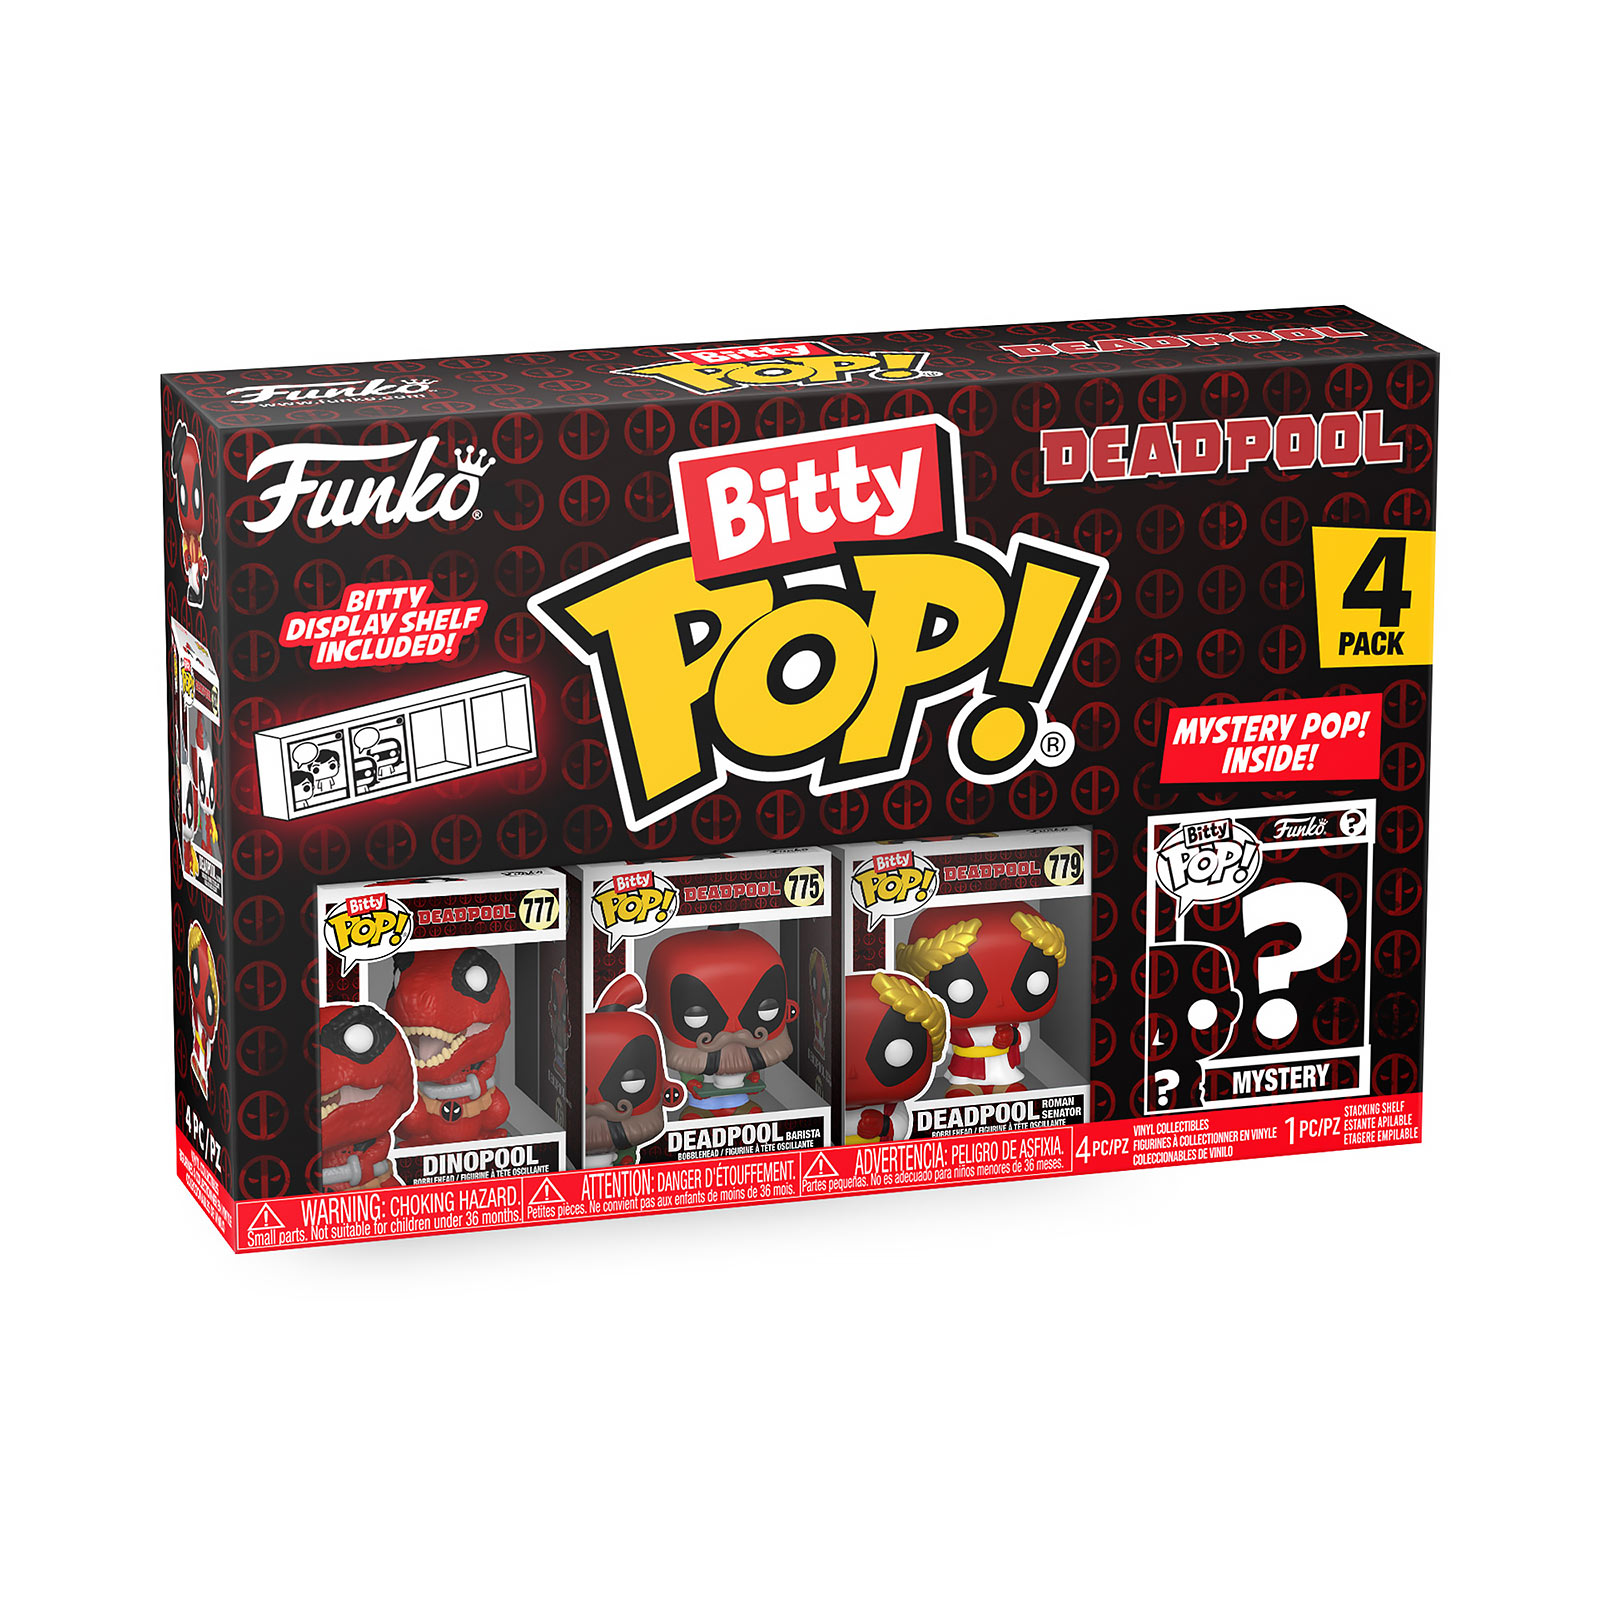 Deadpool - Funko Bitty Pop ensemble de 4 figurines série 3